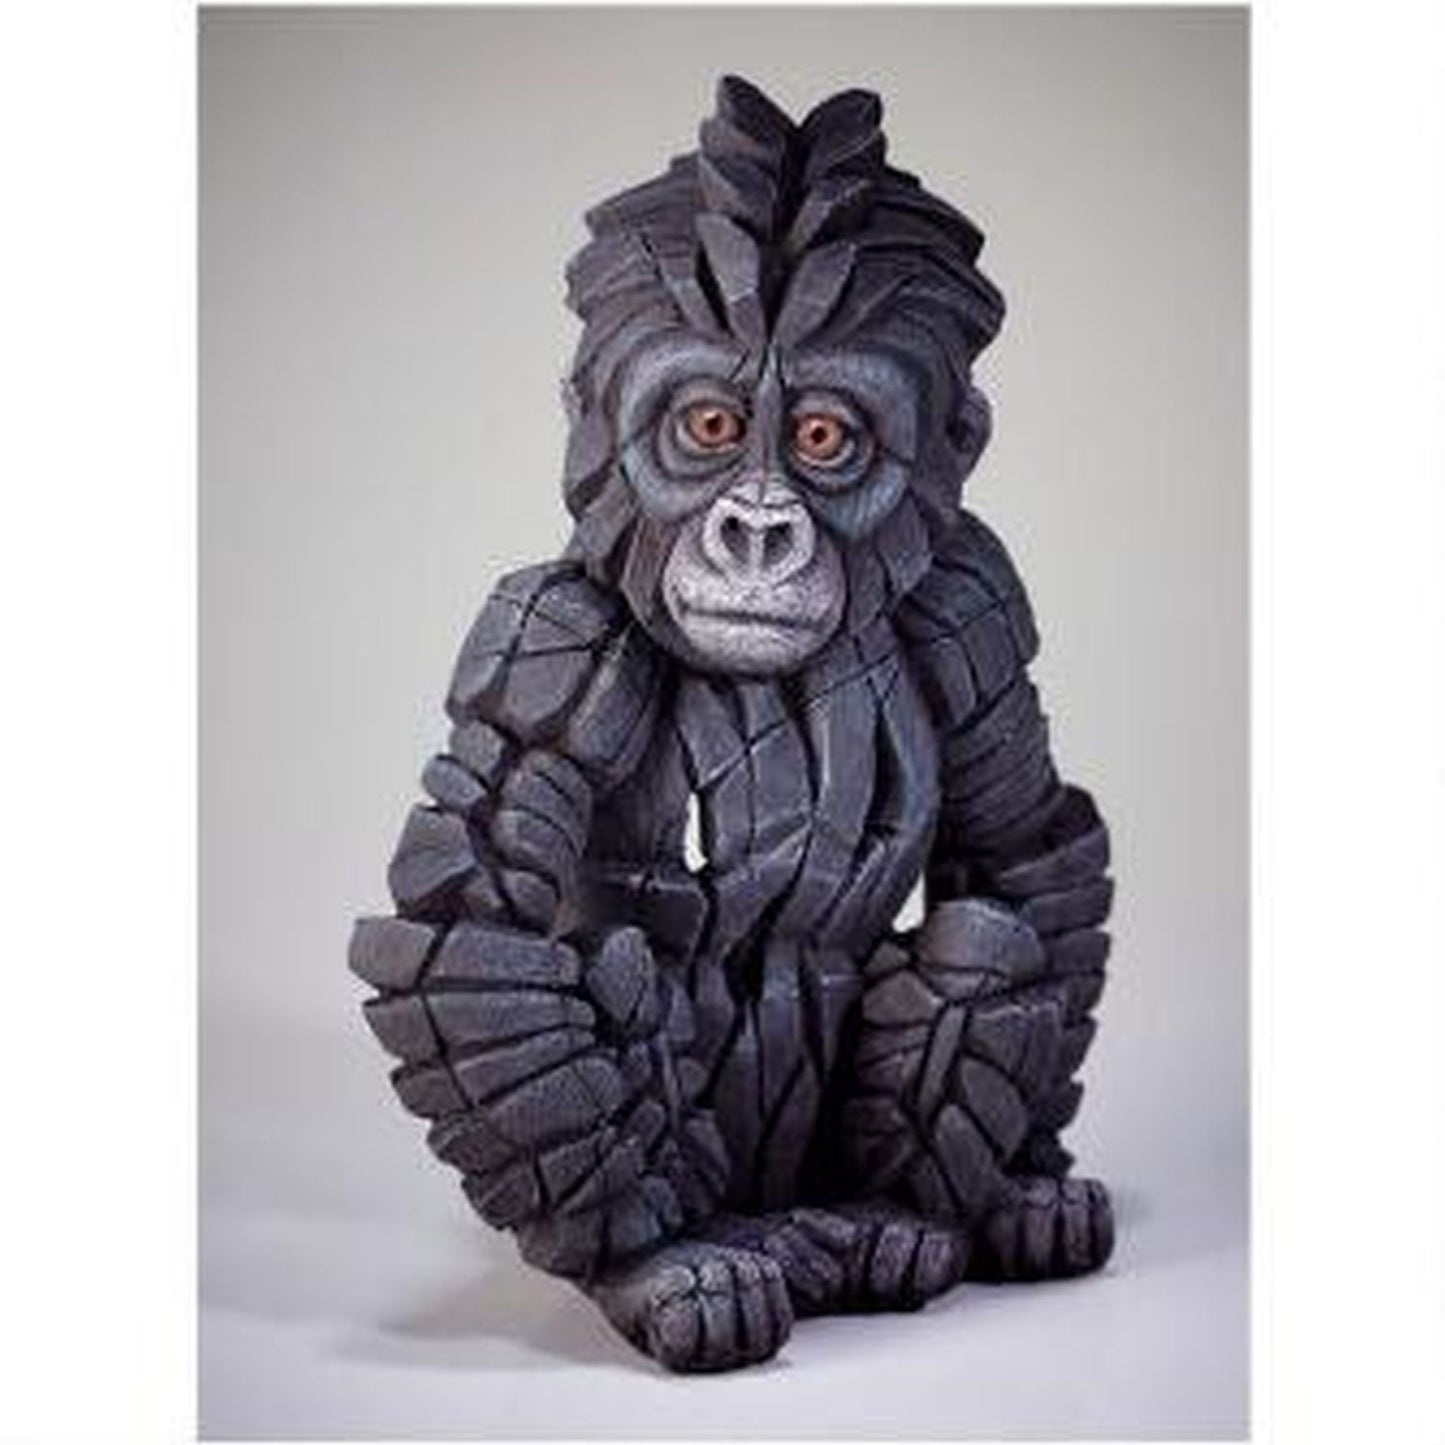 Enesco Edge Sculpture Baby Gorilla